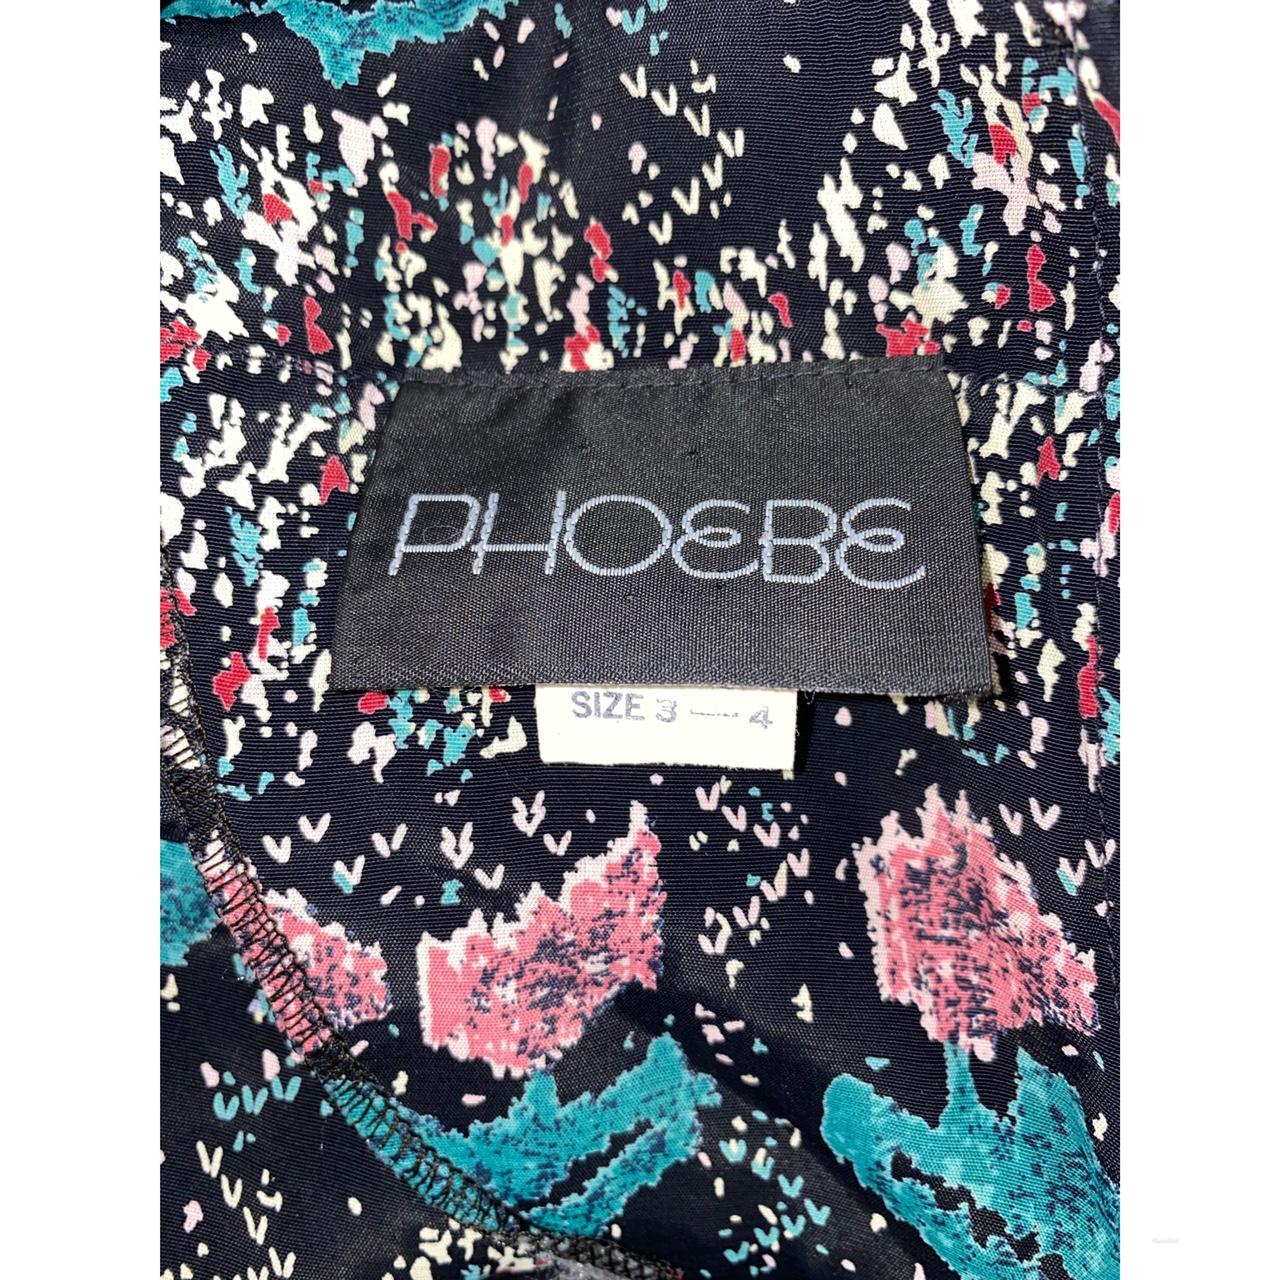 Product Image 4 - Vintage Dress
•Brand Phoebe 
•Labeled Size